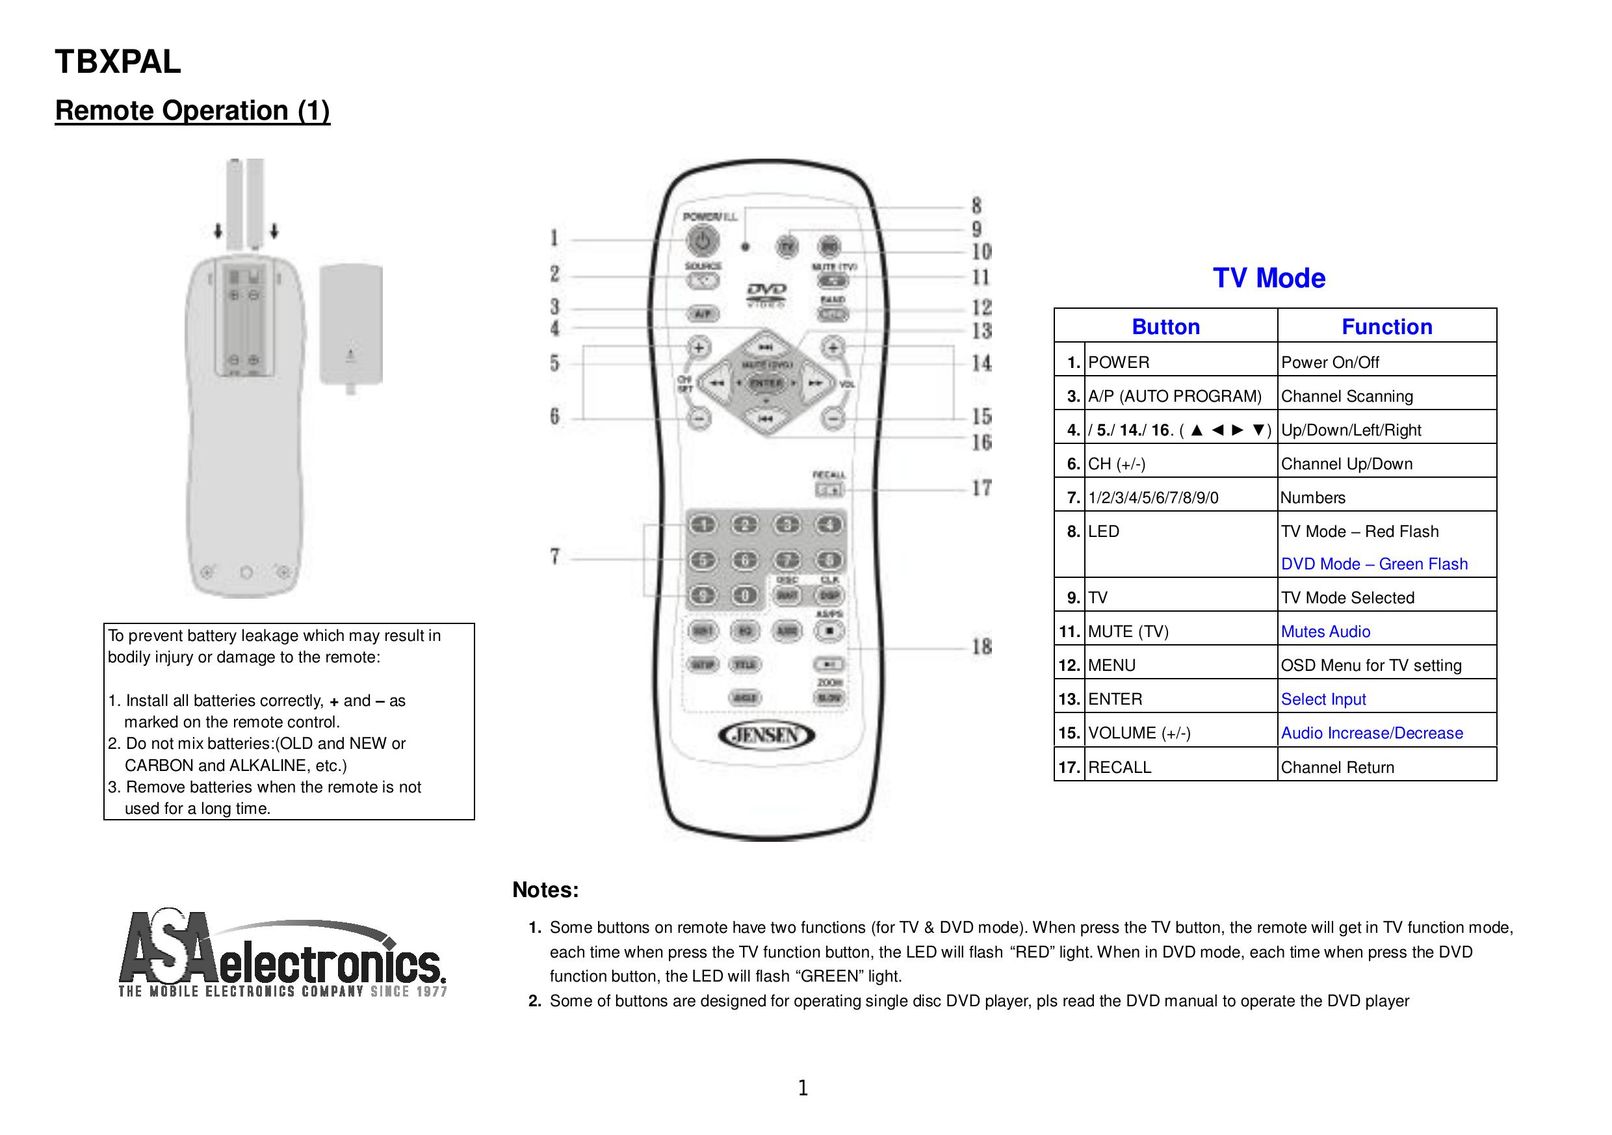 ASA Electronics Universal Remote Universal Remote User Manual